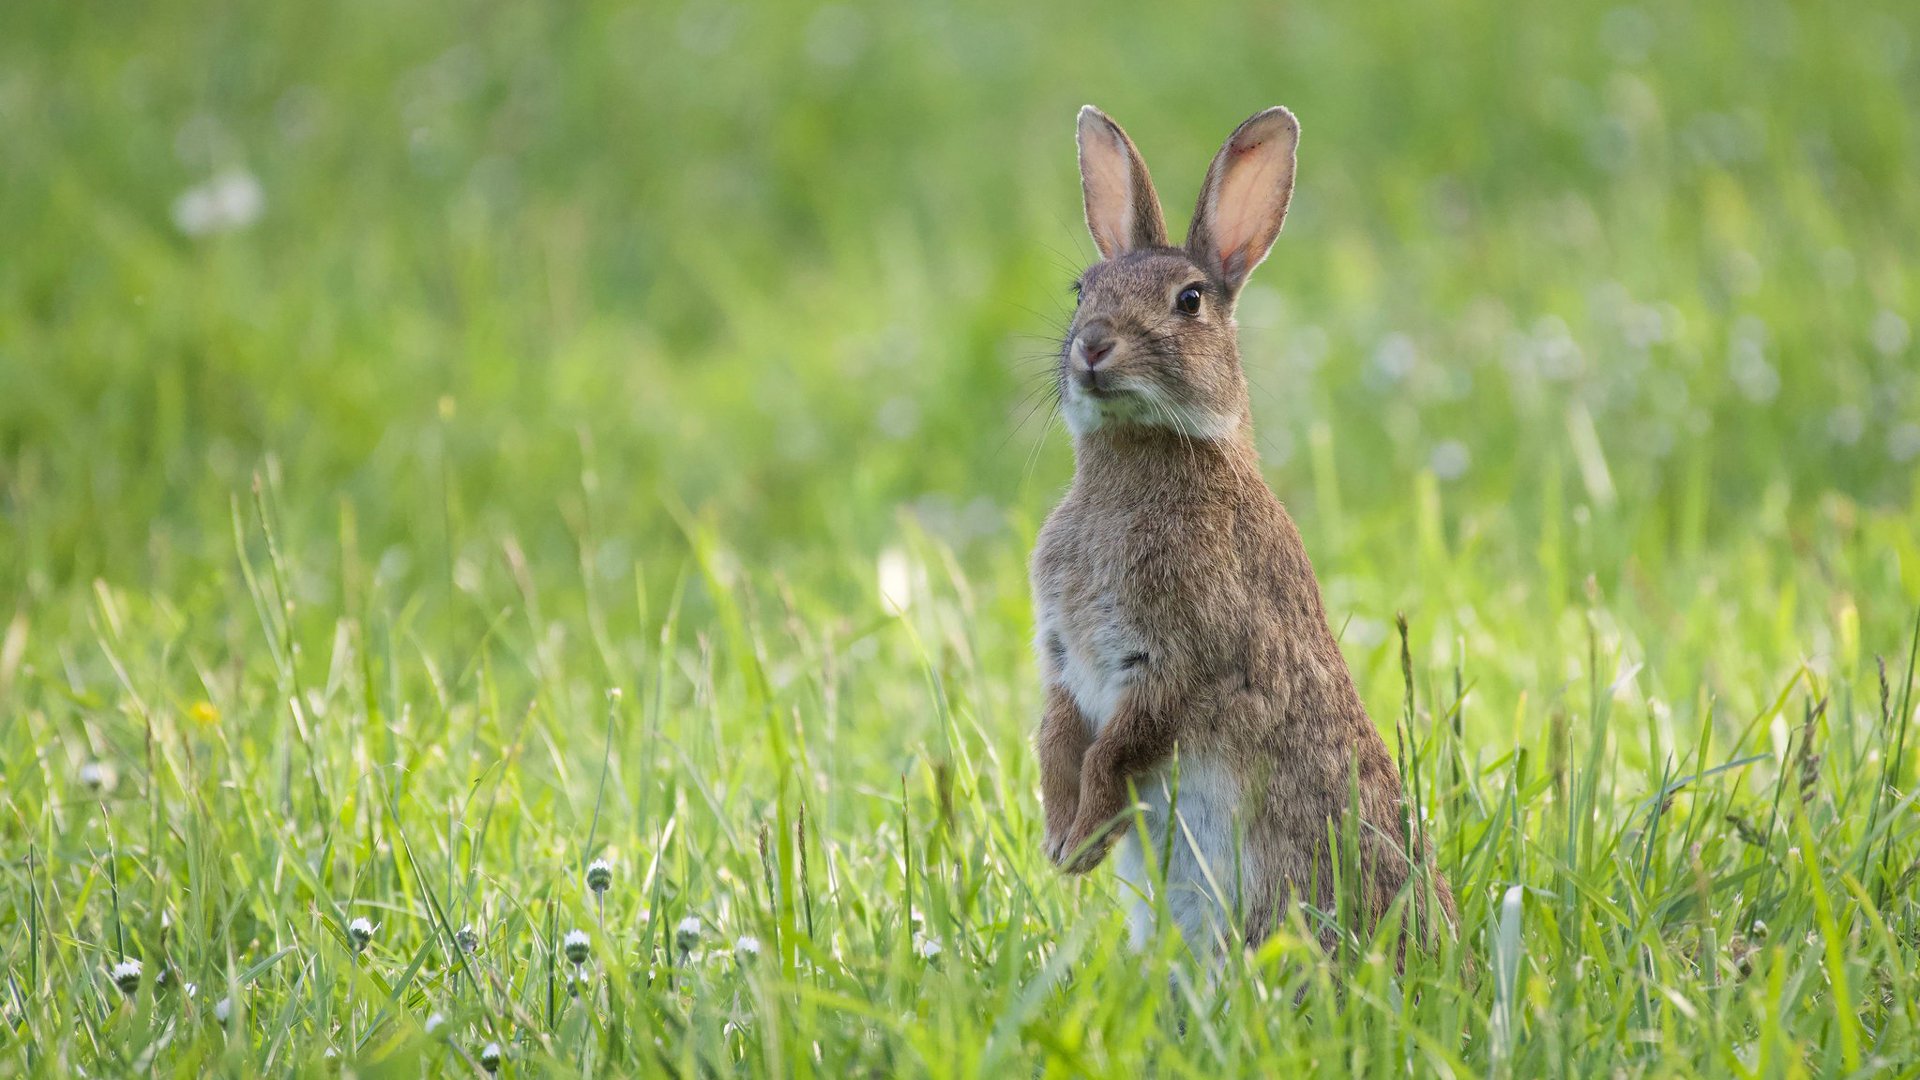 Rabbit Is Standing In Grass Field In Blur Green Wallpaper HD Rabbit